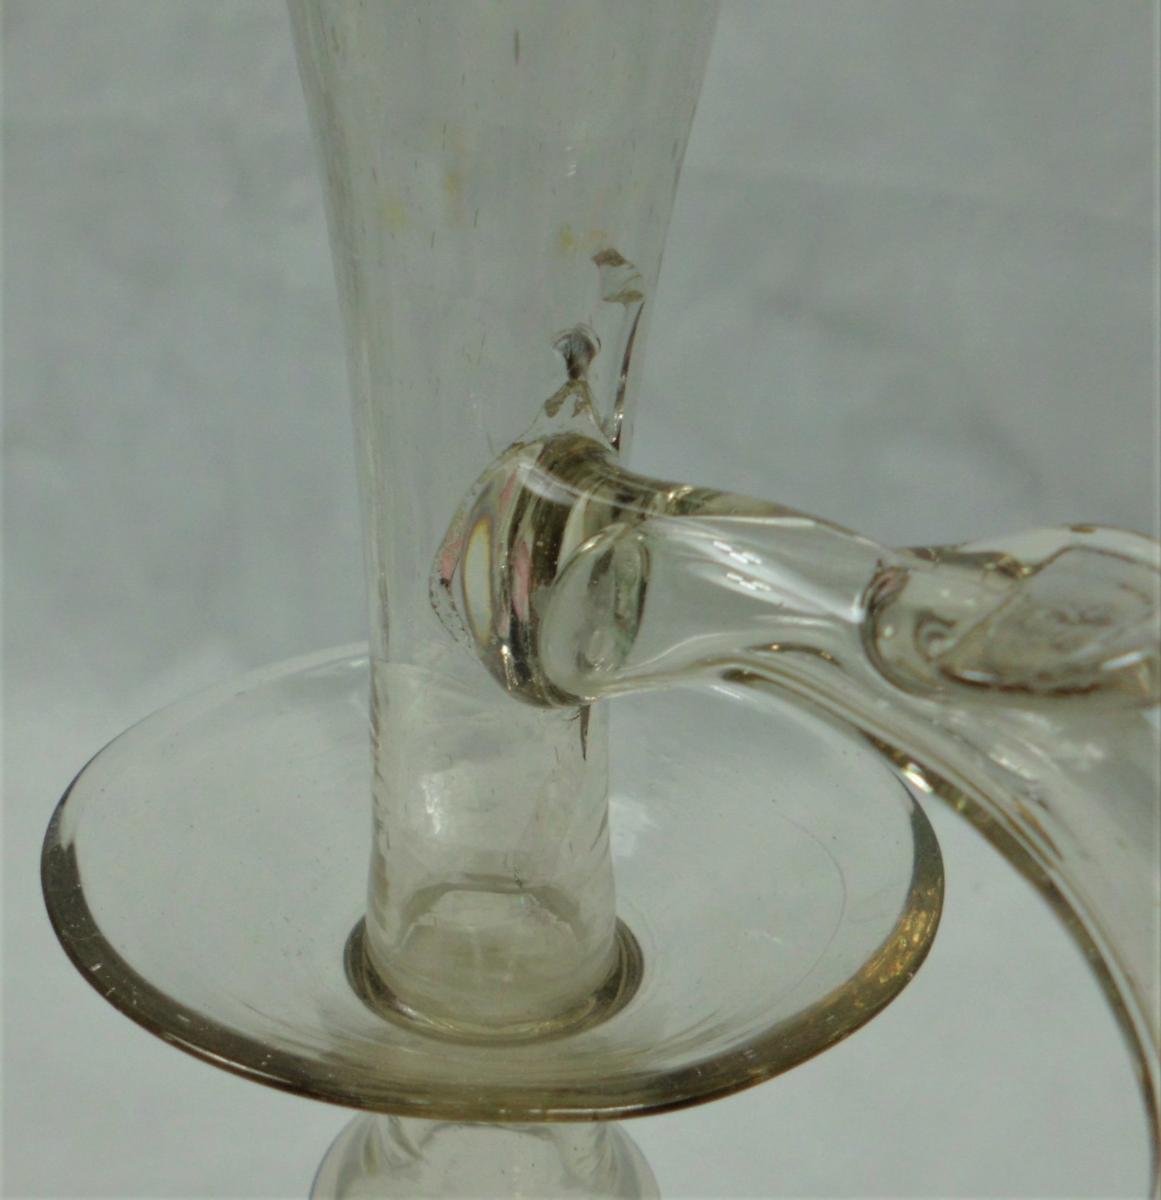 17th centruy glass lace maker's lamp